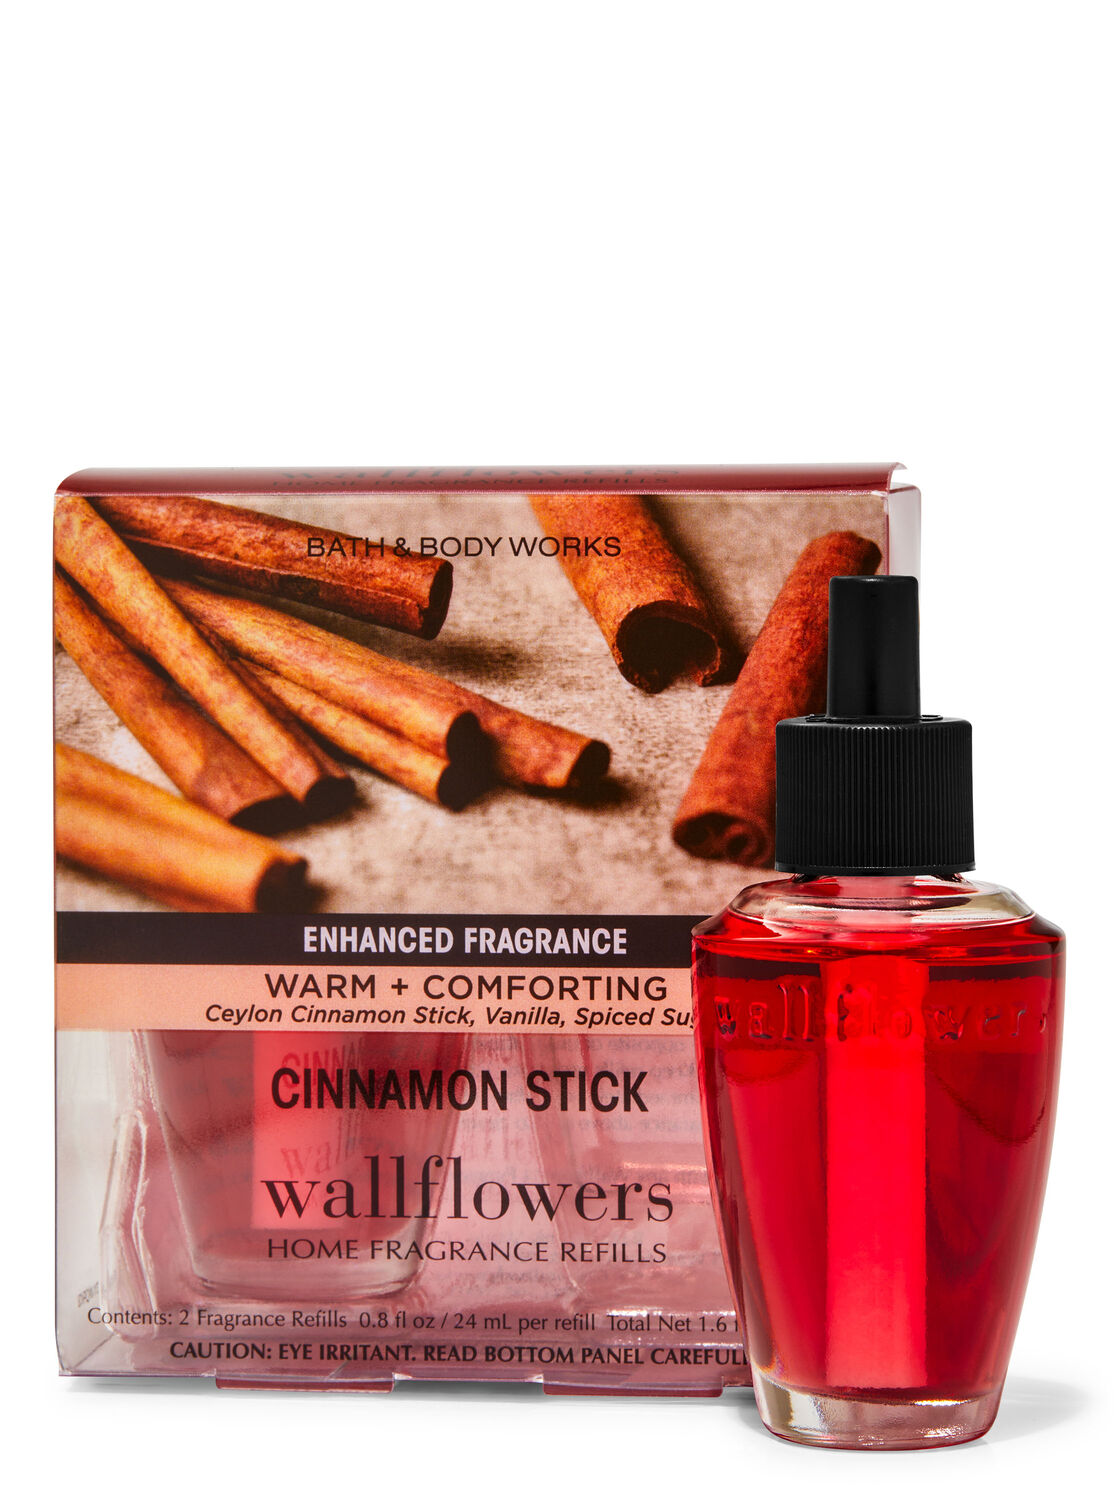 Mahogany Teakwood Wallflowers Refills, 6-Pack, Bath & Body Works